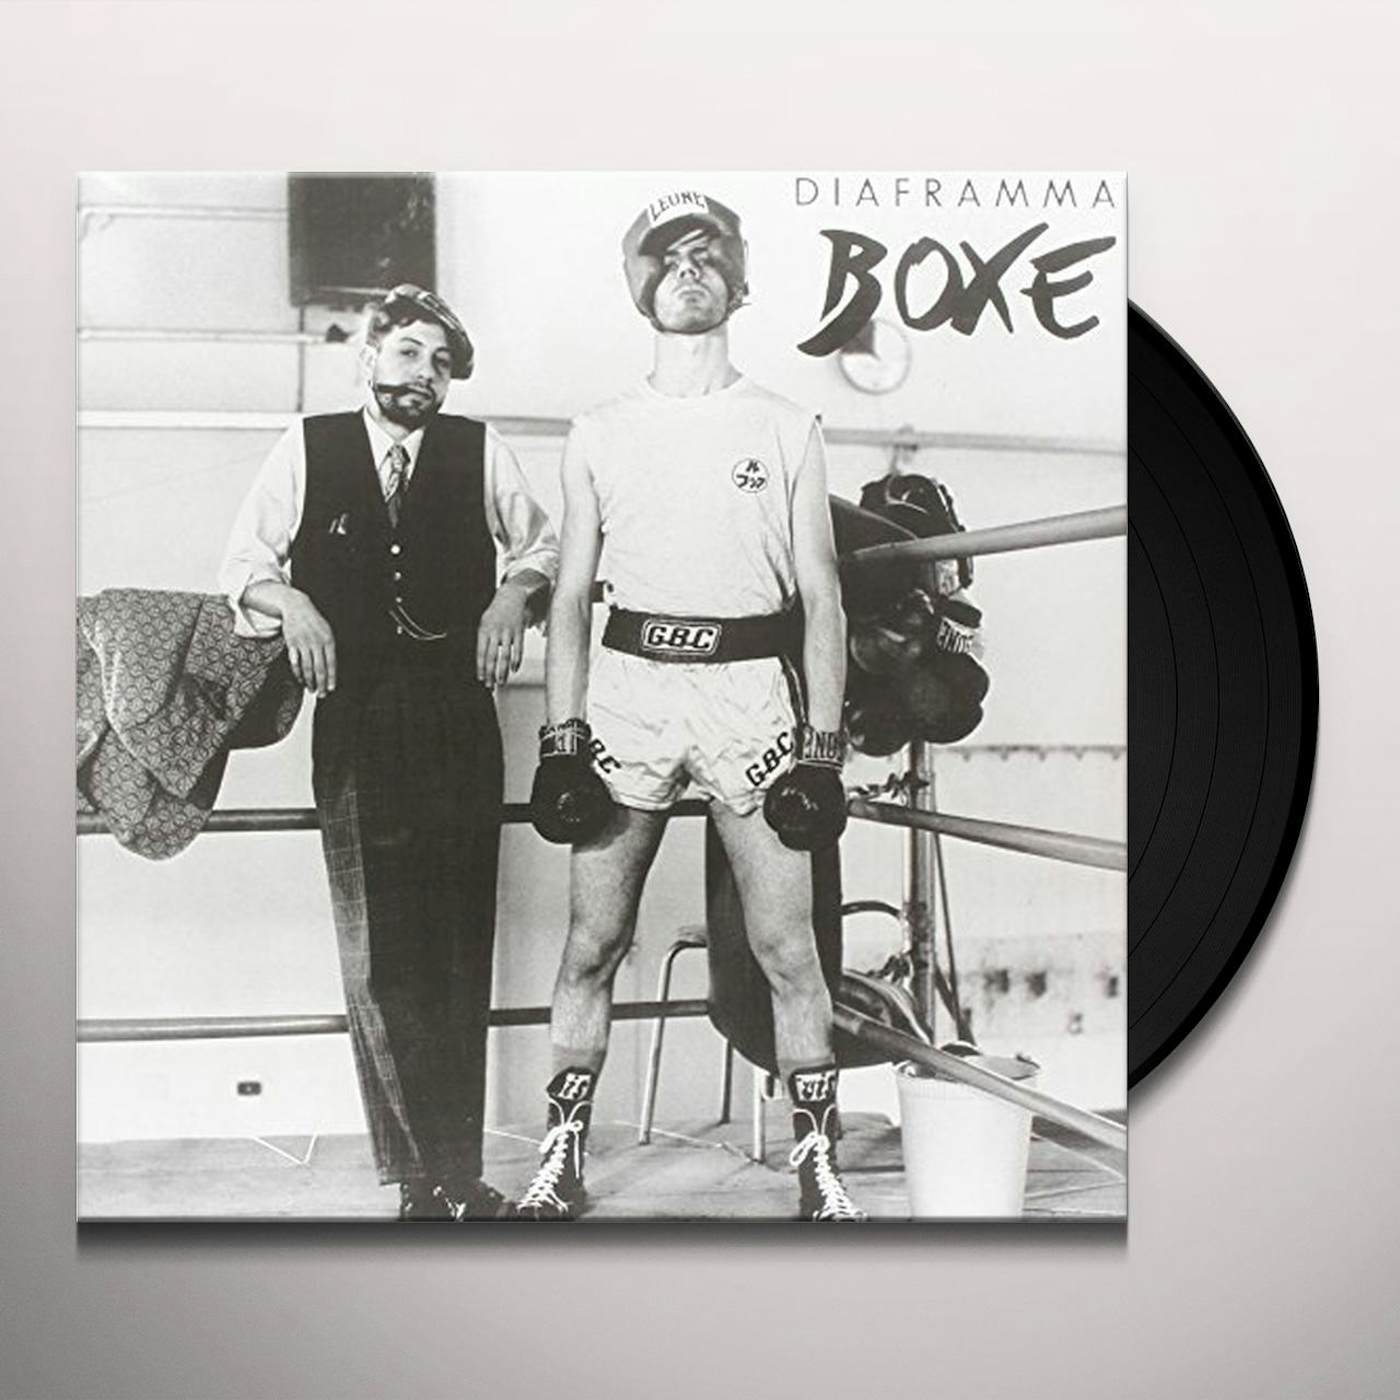 Diaframma Boxe Vinyl Record